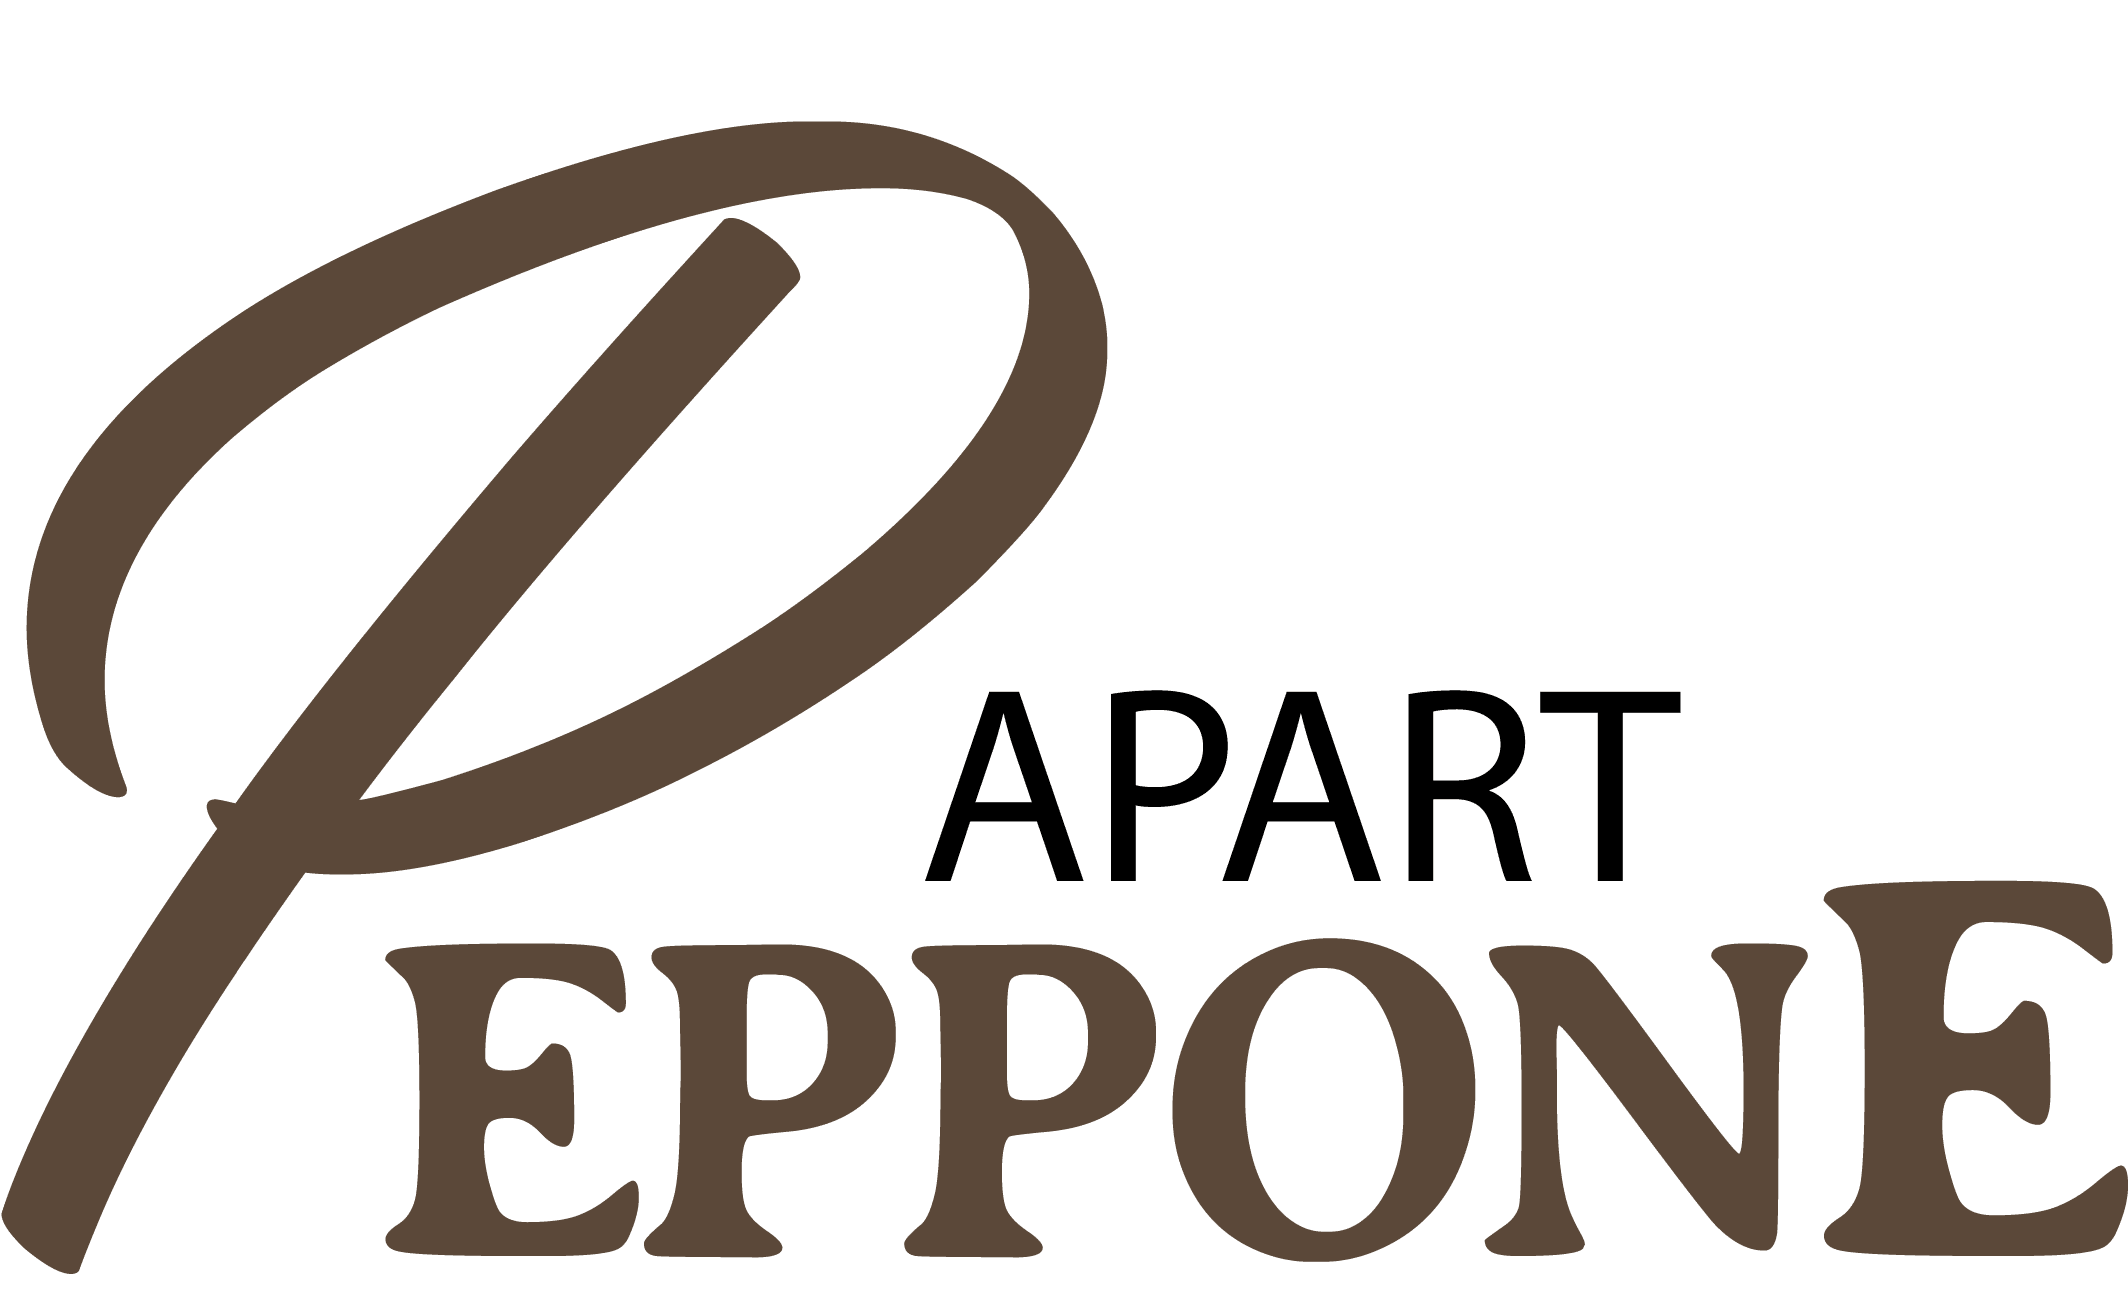 Apart Peppone